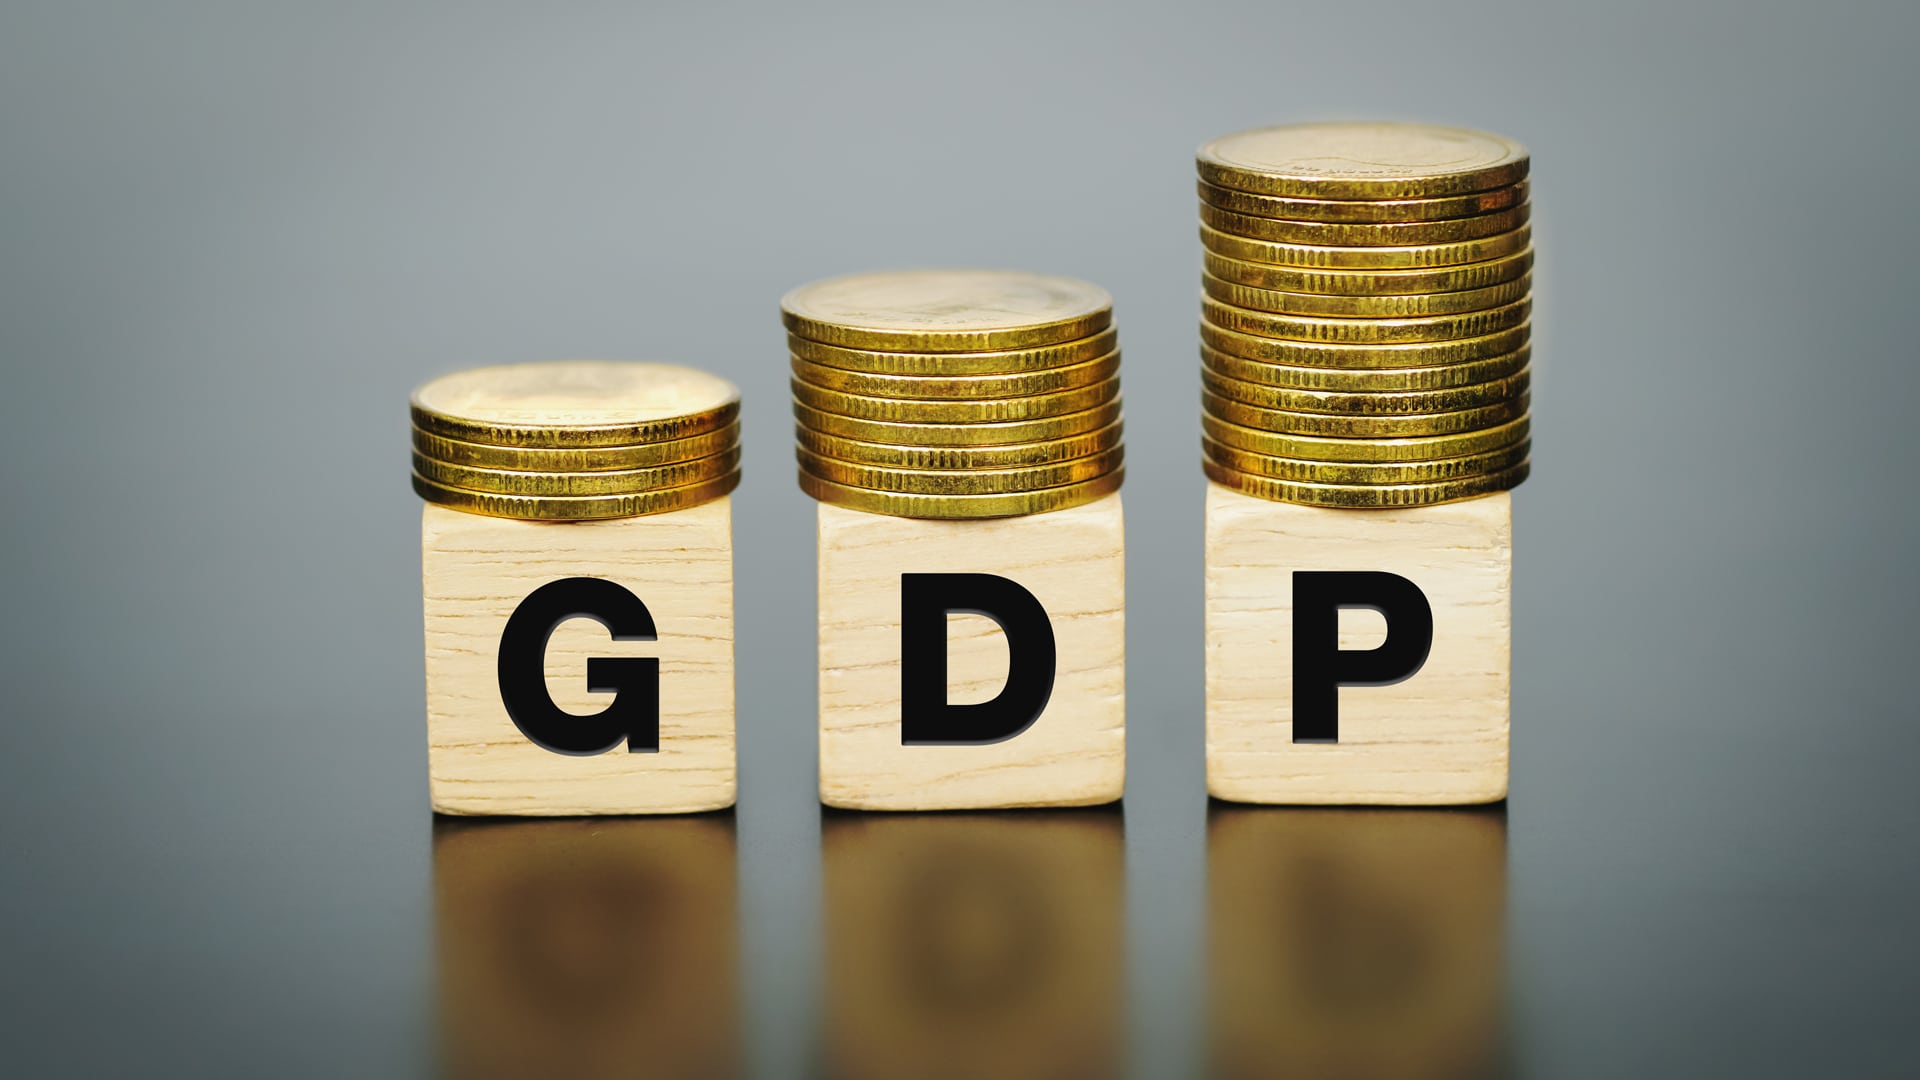 Slowdown in GDP growth late last year temporary: Moody's Analytics